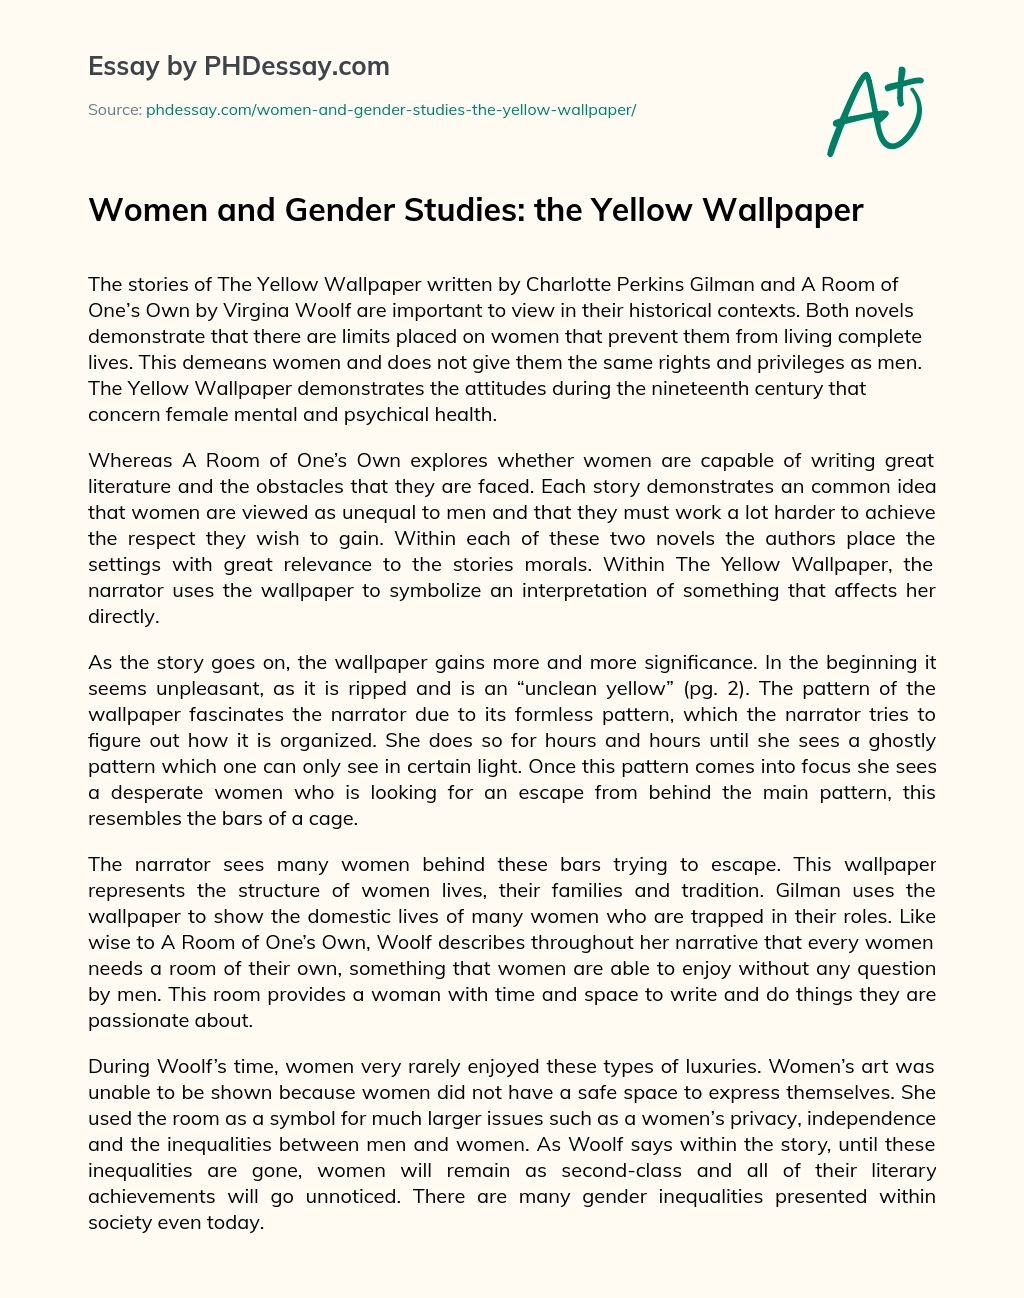 Women and Gender Studies: the Yellow Wallpaper essay